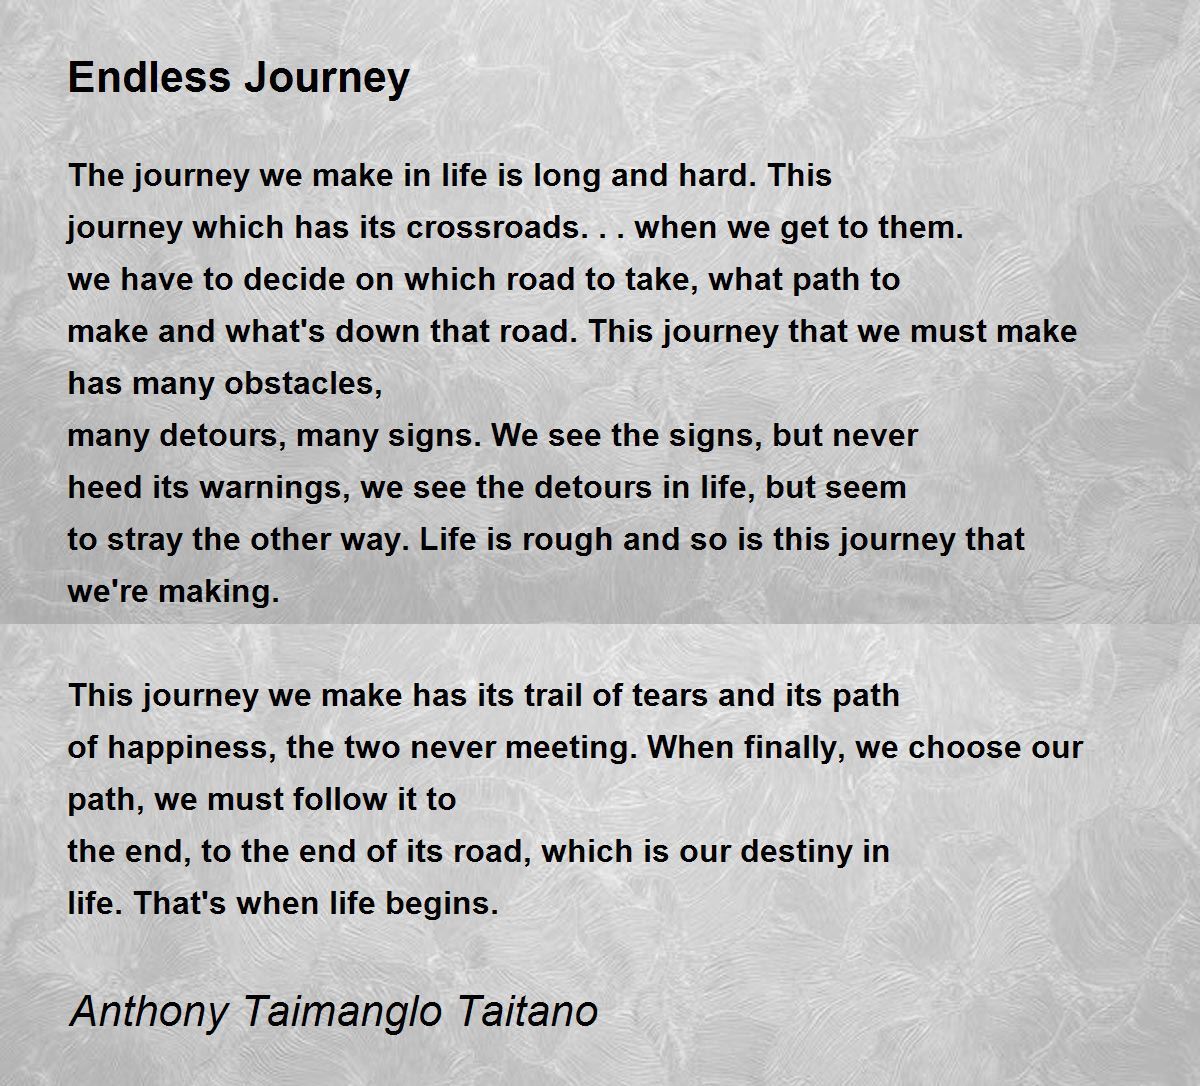 endless journey